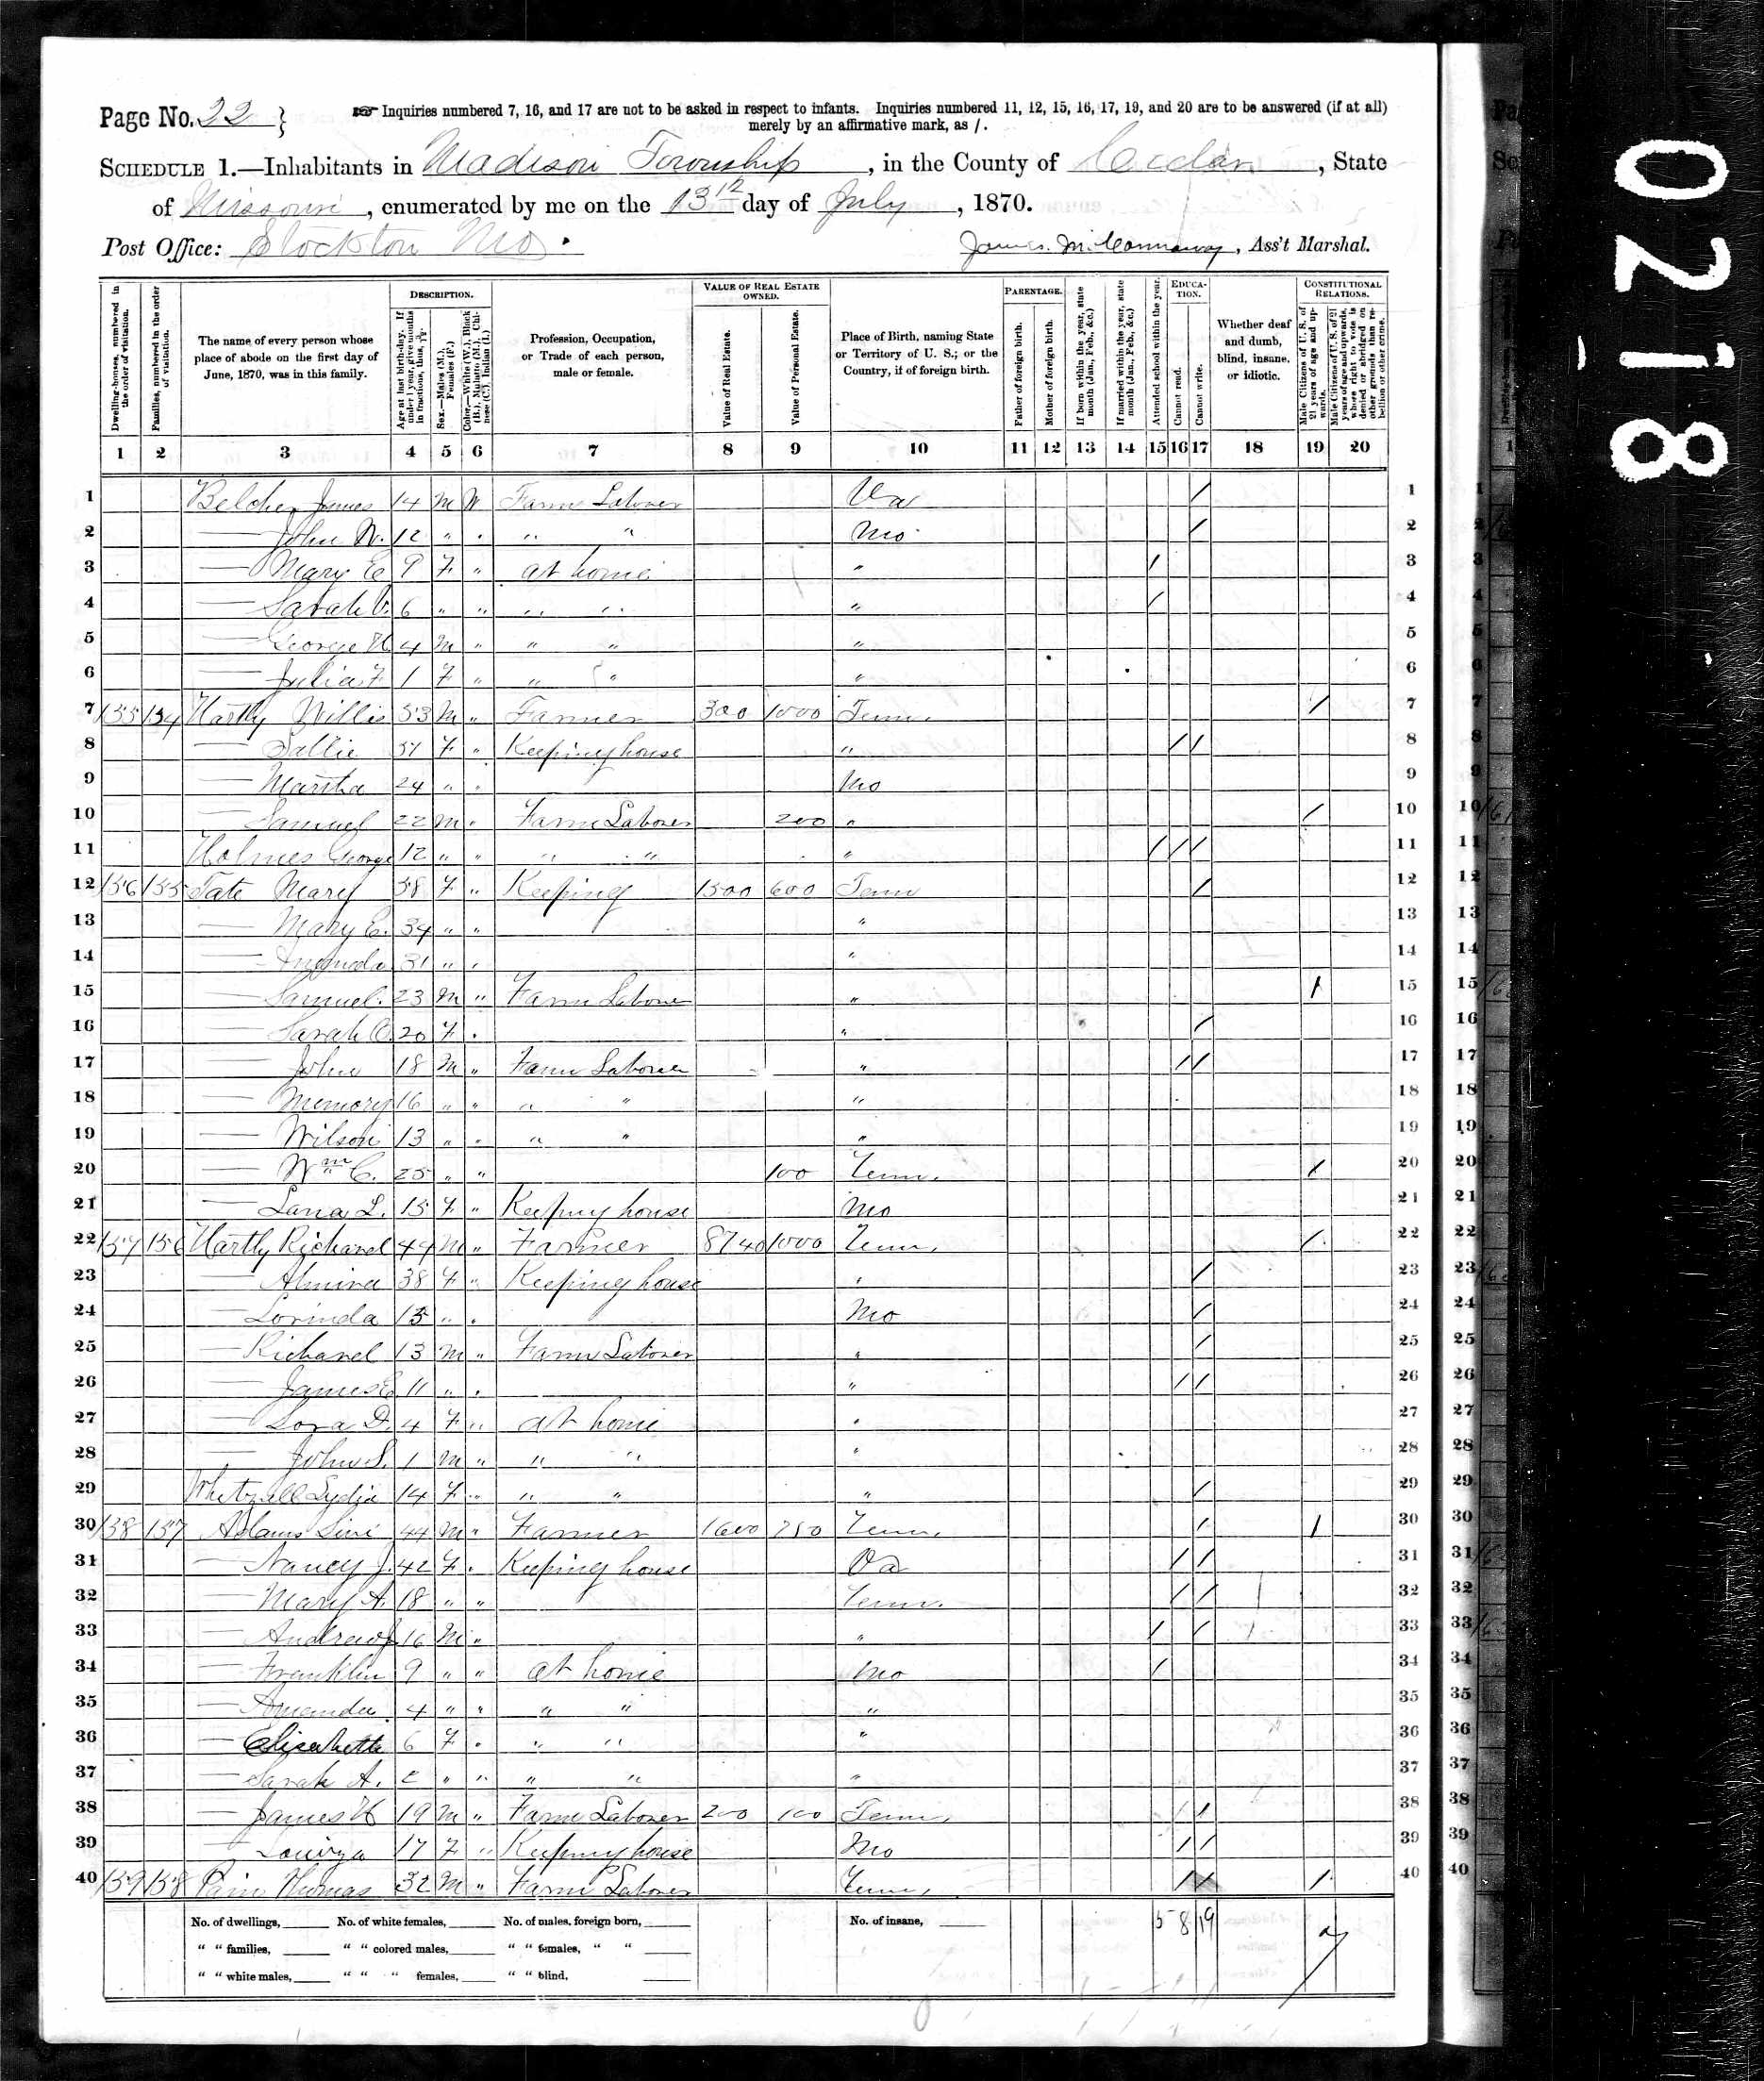 Richard D. Hartley, 1870 Cedar County, Missouri, census